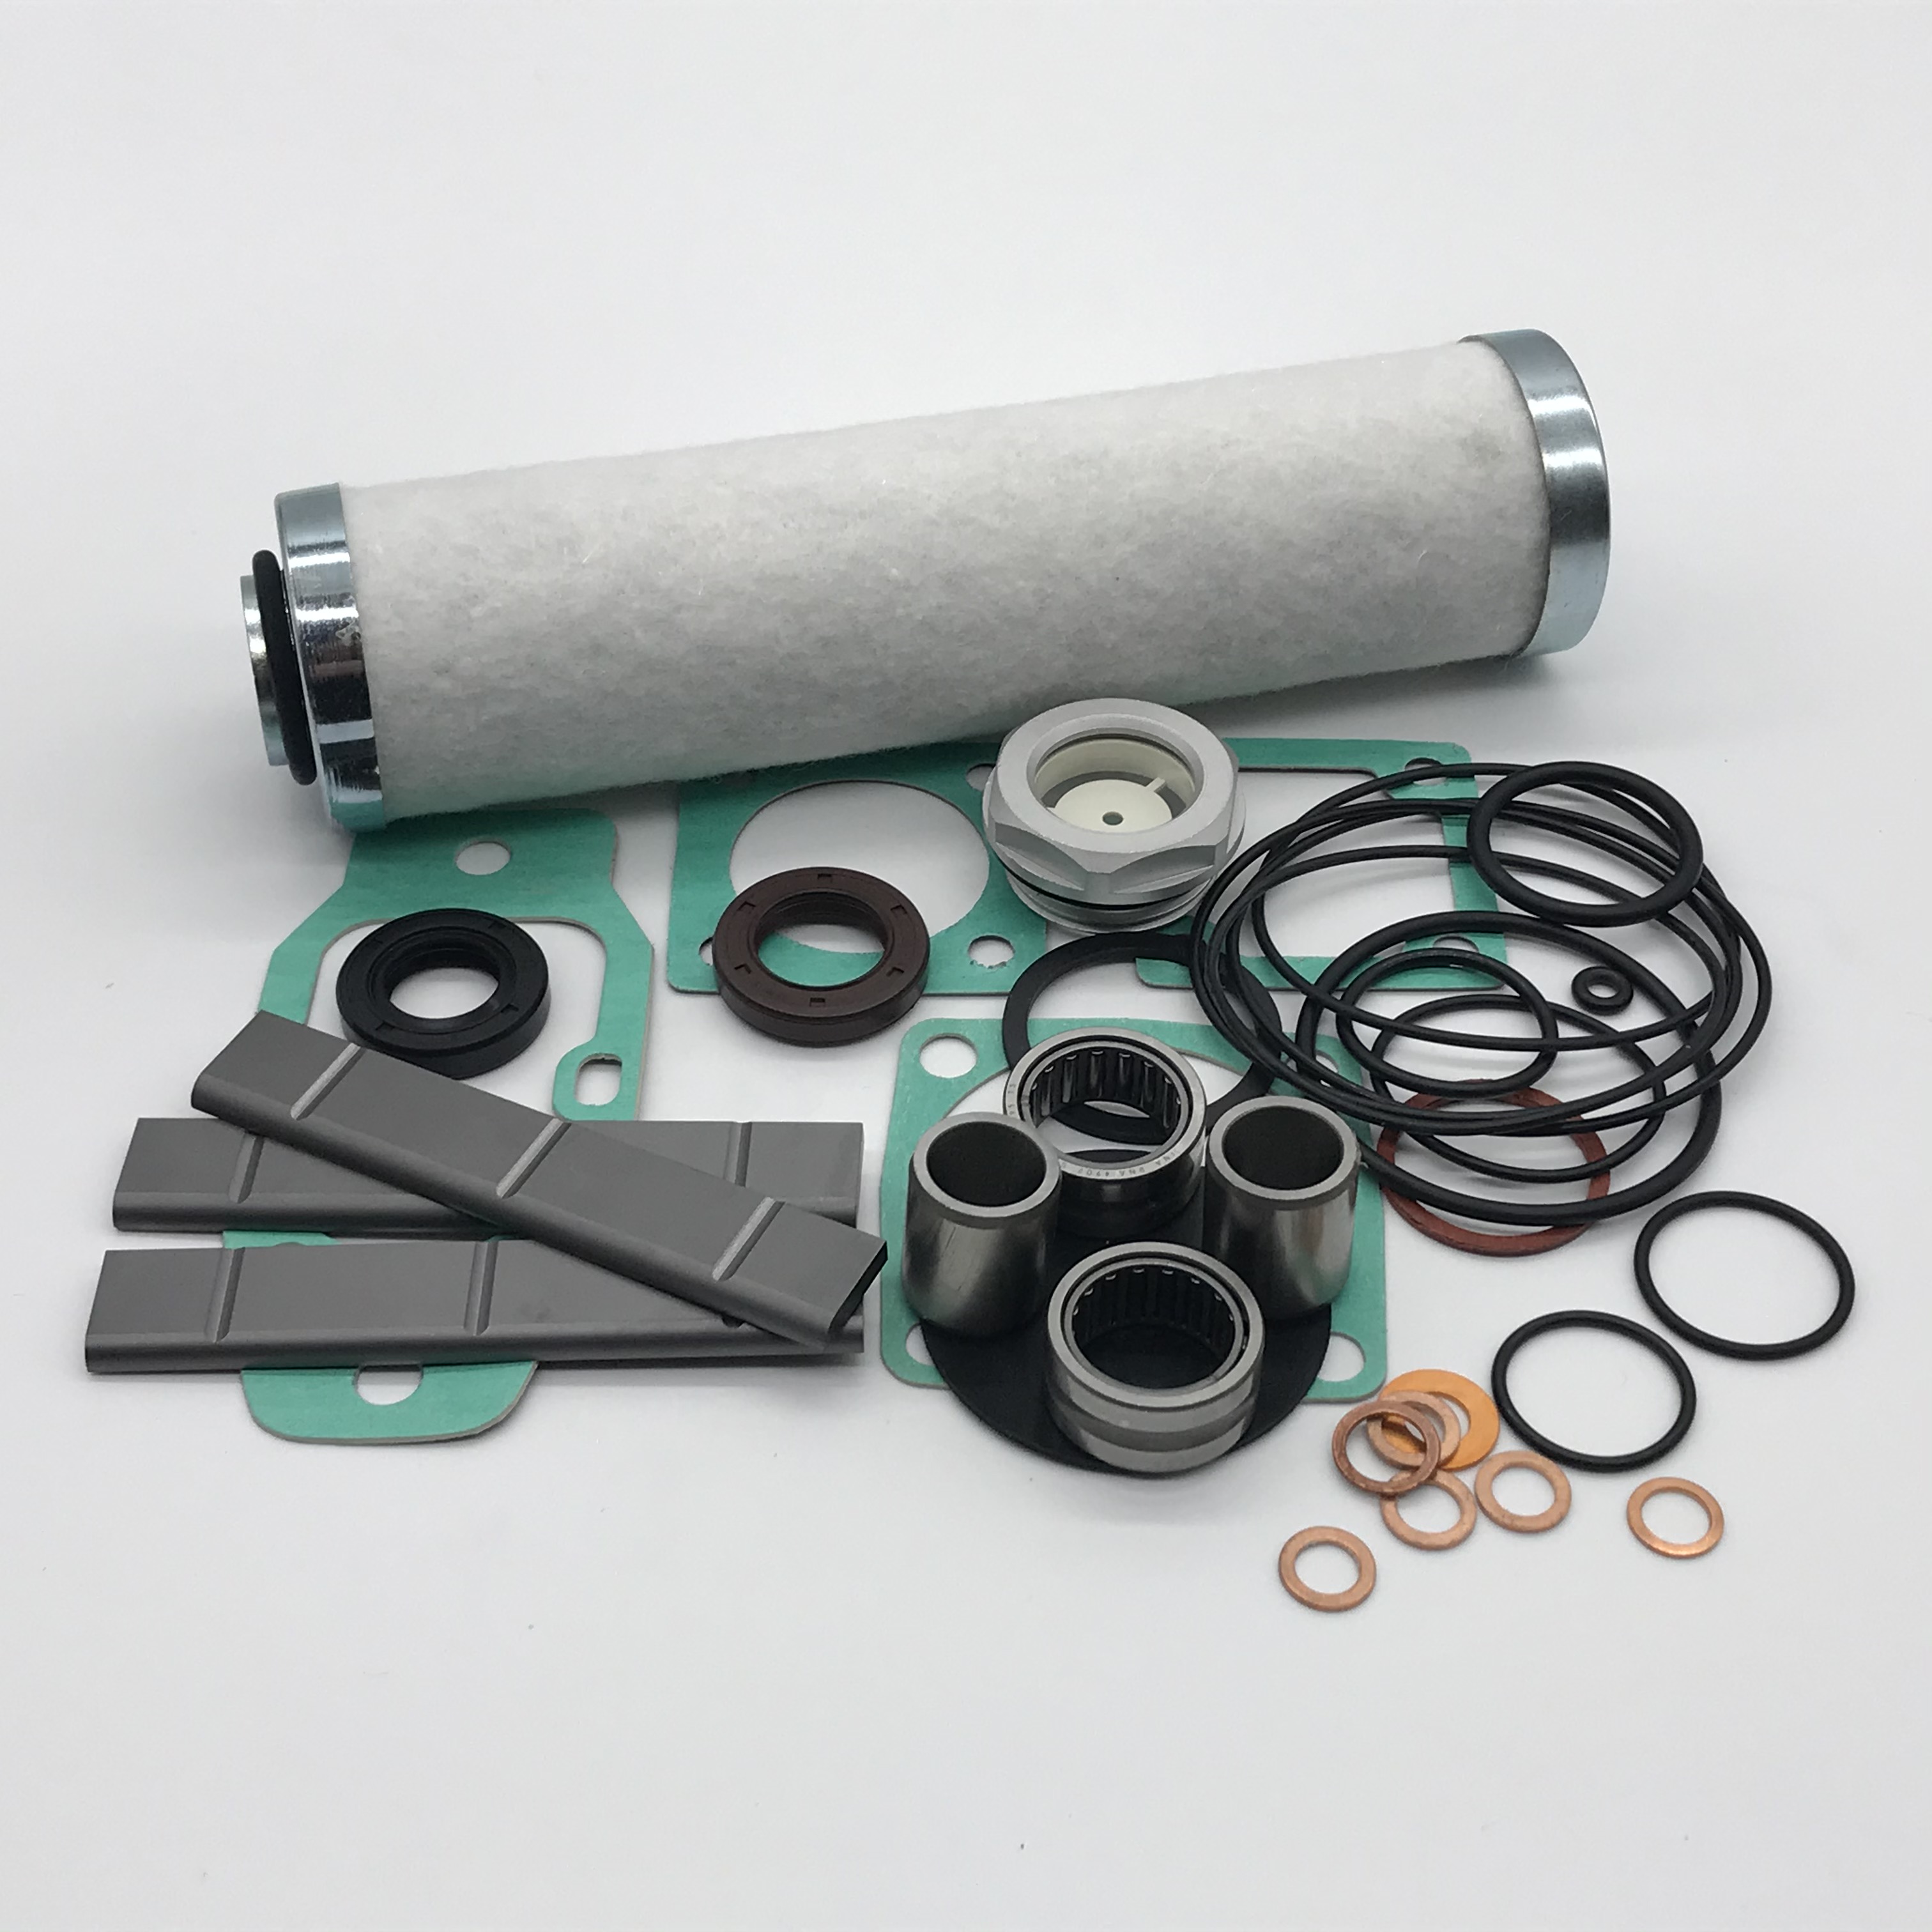 repair kit - PN : PPB0010B-MK for Busch Vacuum pump R5 RA RC RE KB EVA PB. Your spare parts up to 50% cheaper !